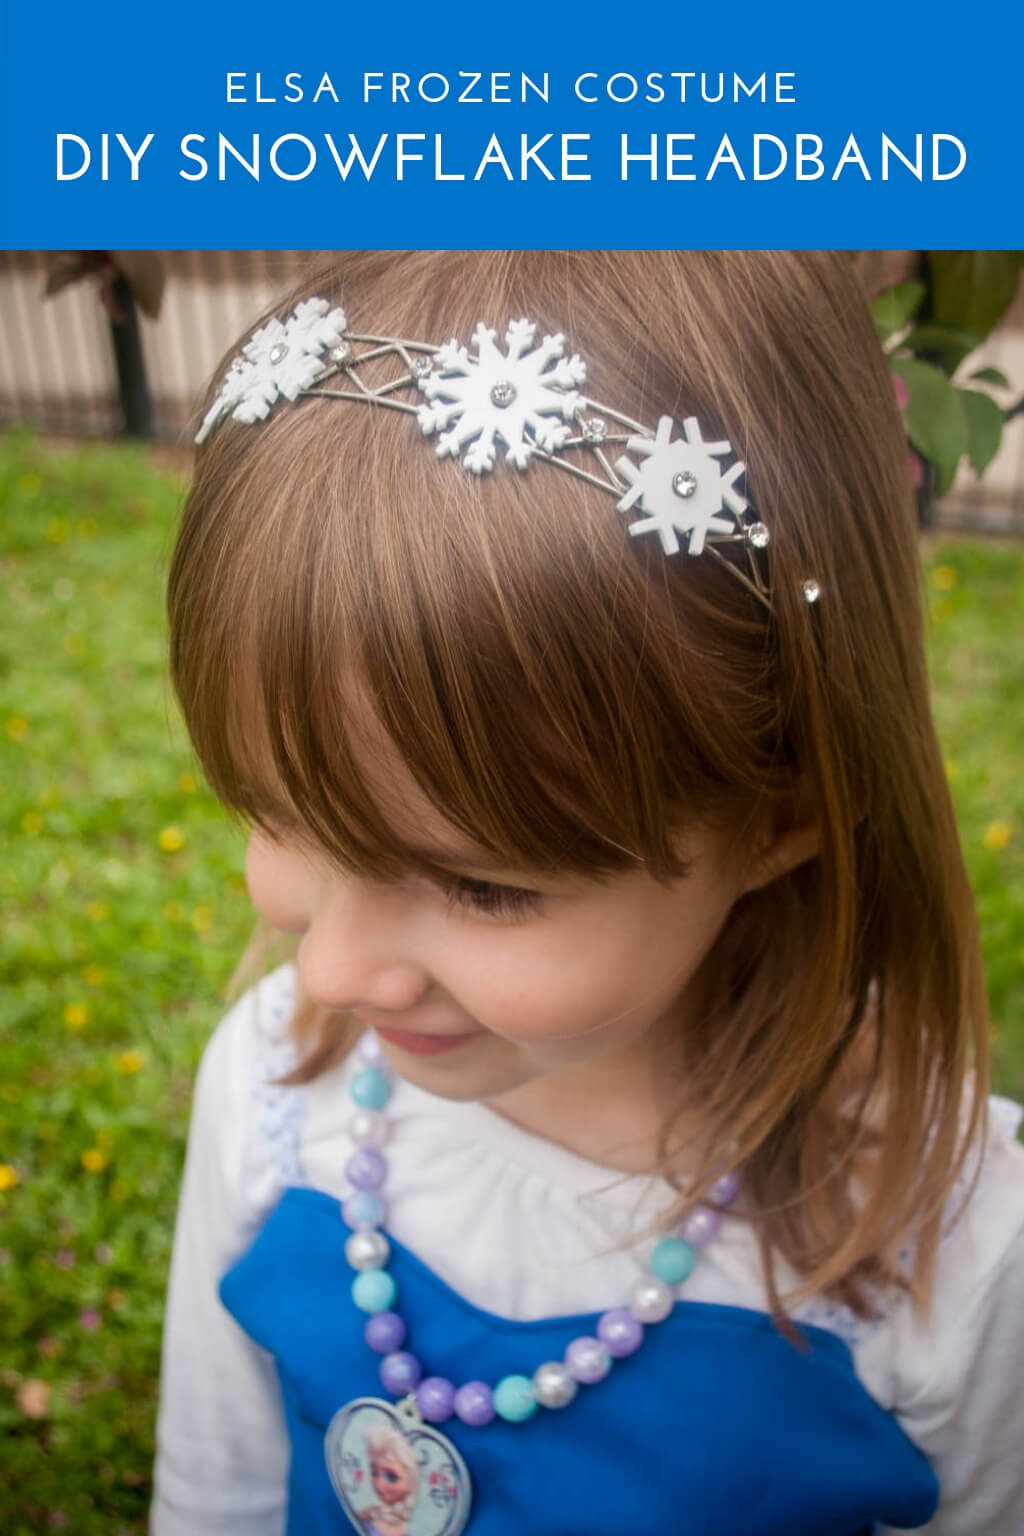 DIY snowflake headband for an Elsa Frozen costume